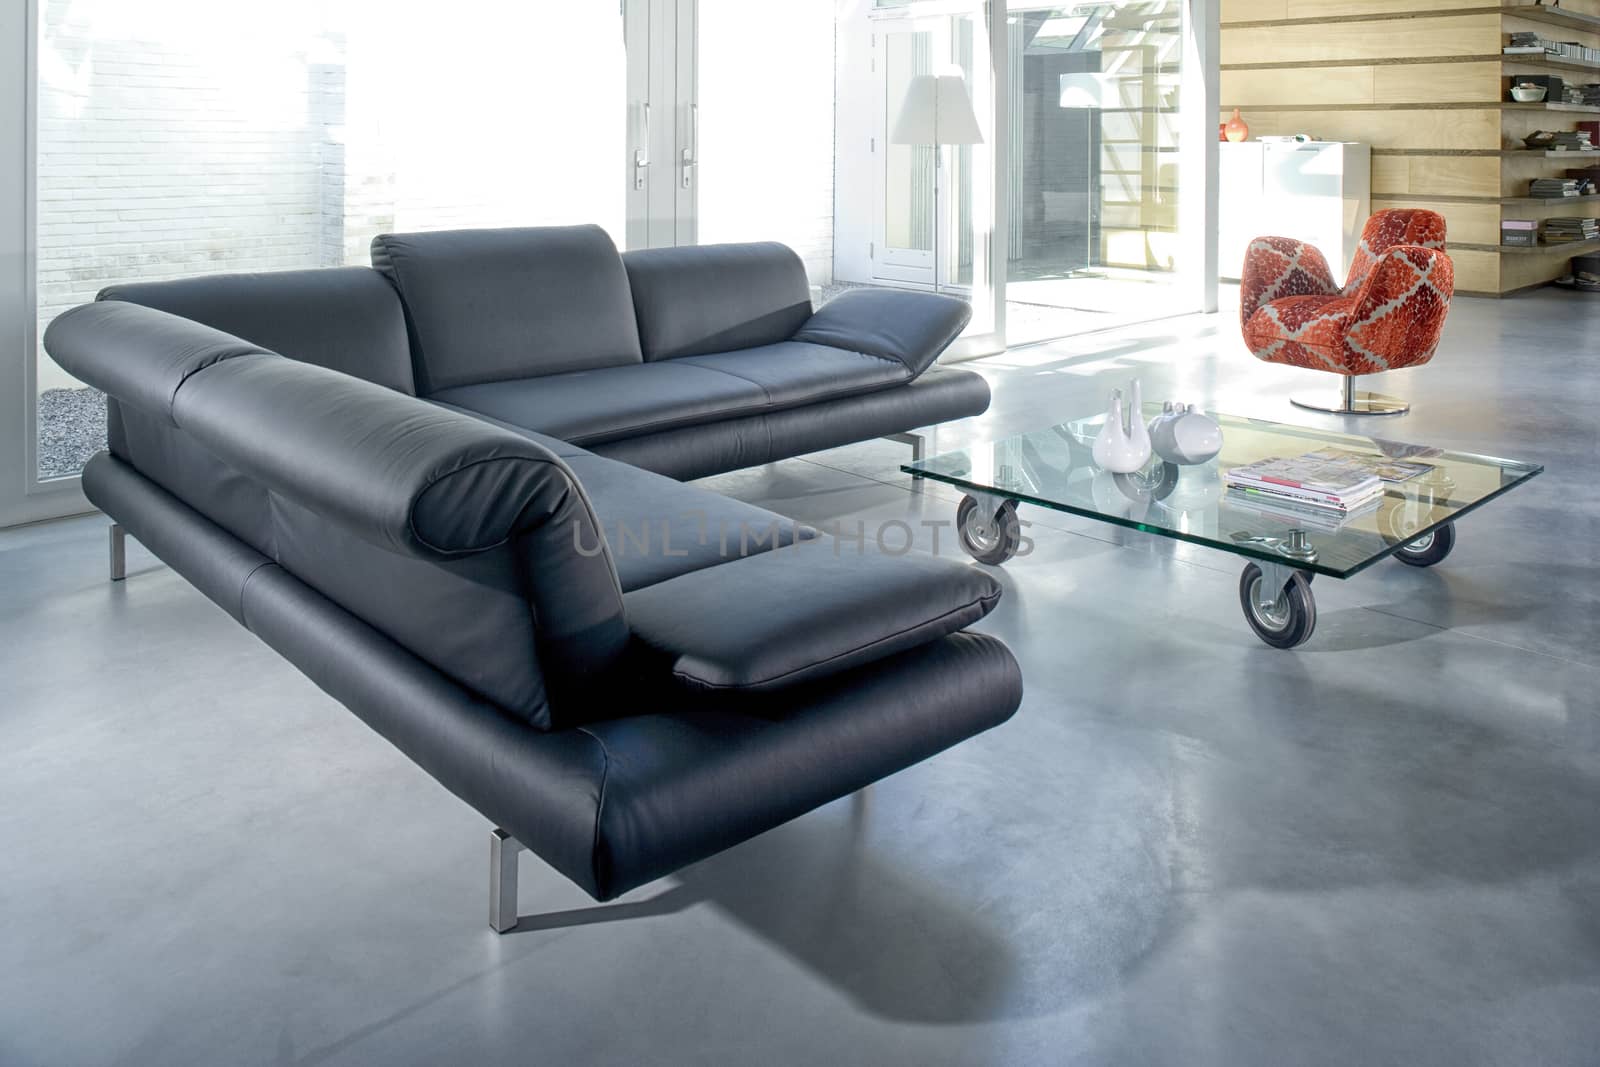 Elegant big lounge with grey comfortable corner sofa in a modern house